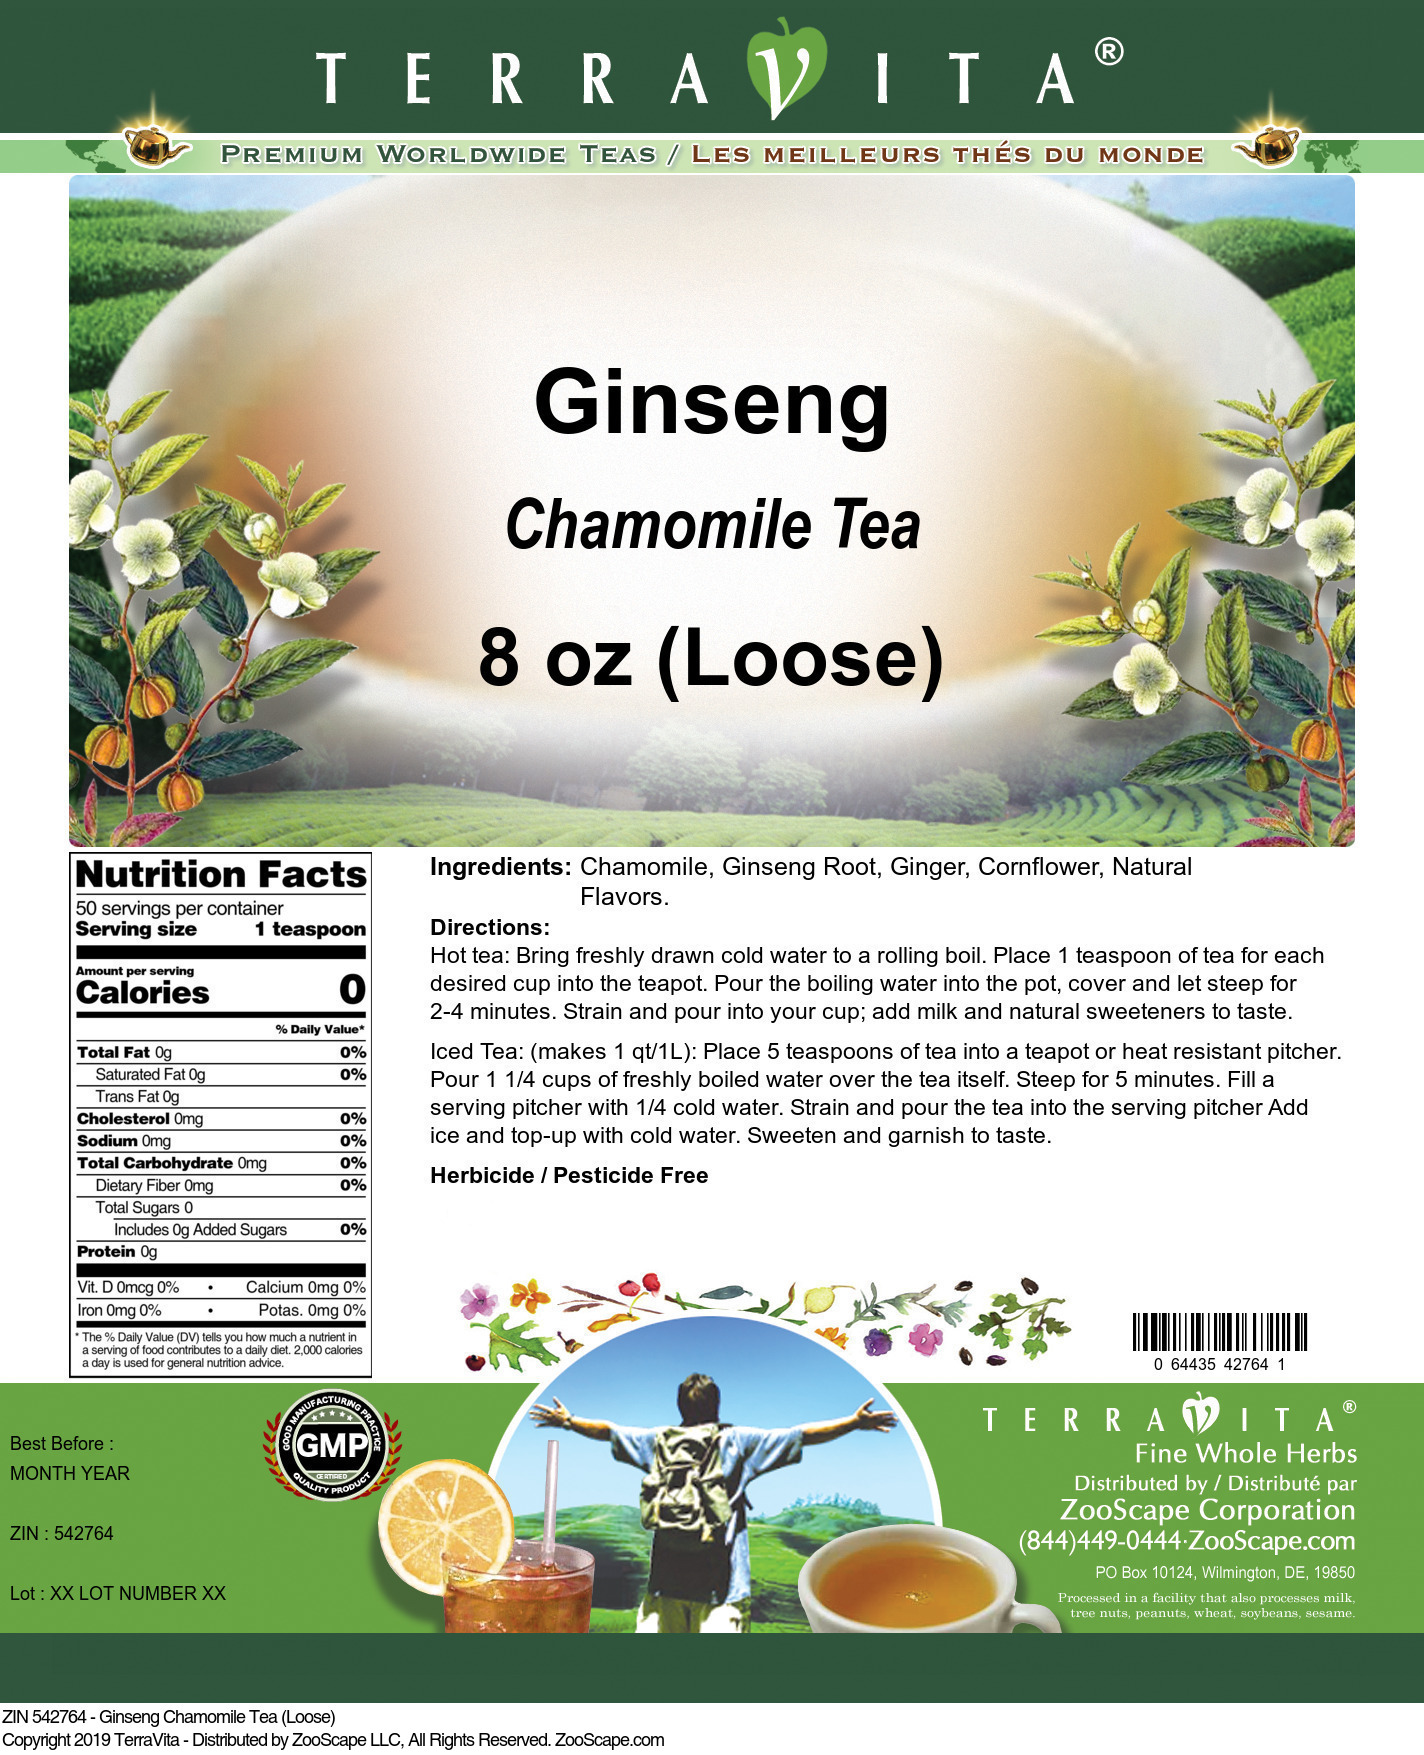 Ginseng Chamomile Tea (Loose) - Label